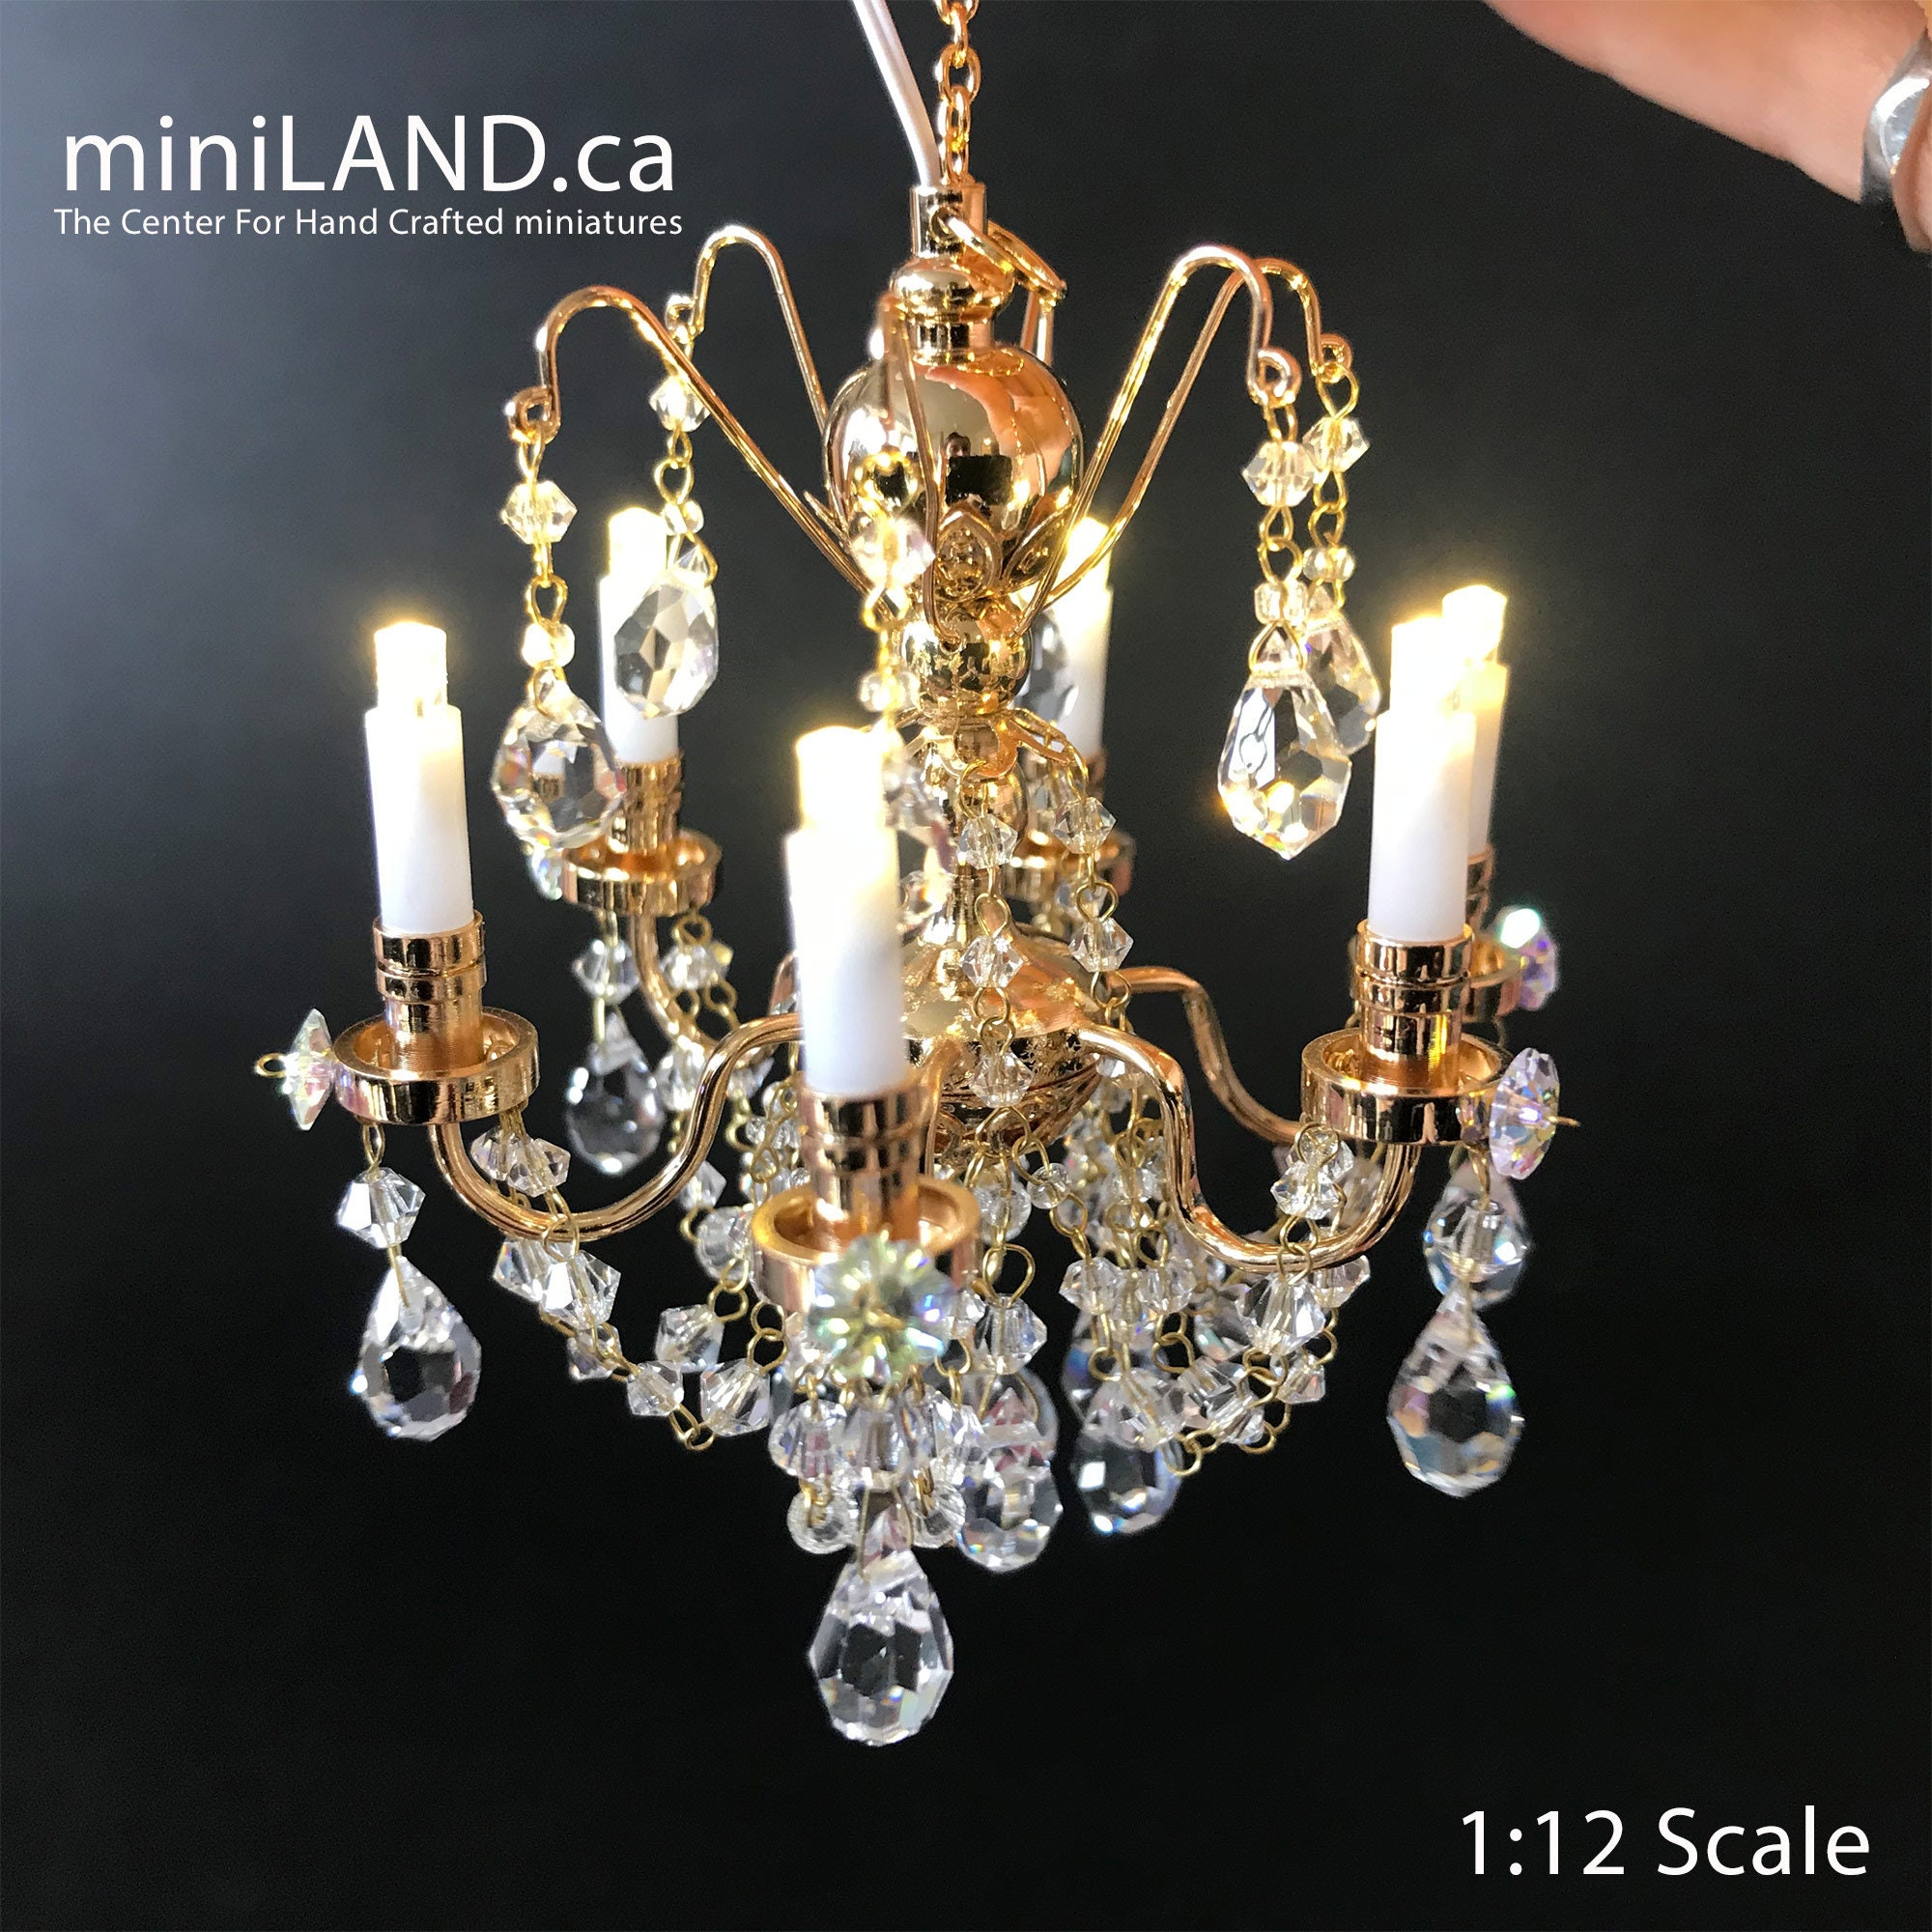 Dollhouse Miniature Brass Column Floor Lamp in Crystal by 